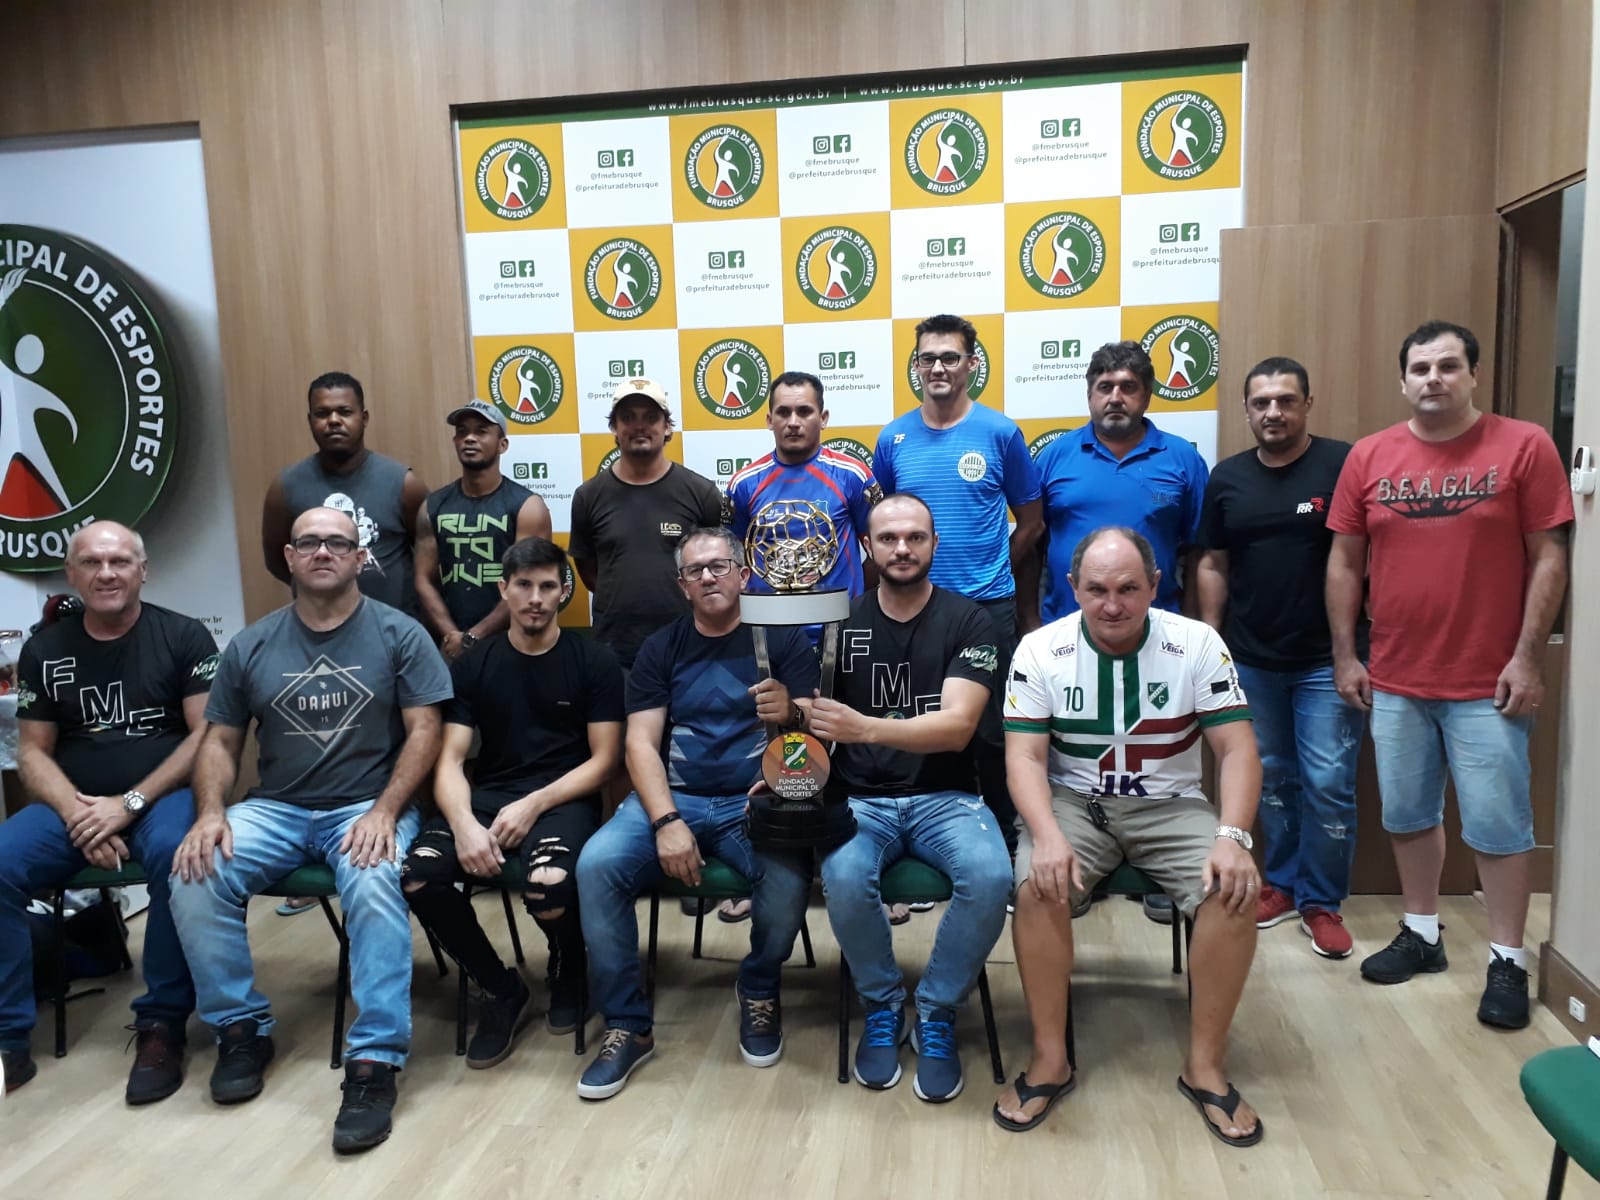 Campeonato municipal de futebol a será Taça Vidraçaria Azaléia de Futebol Amador